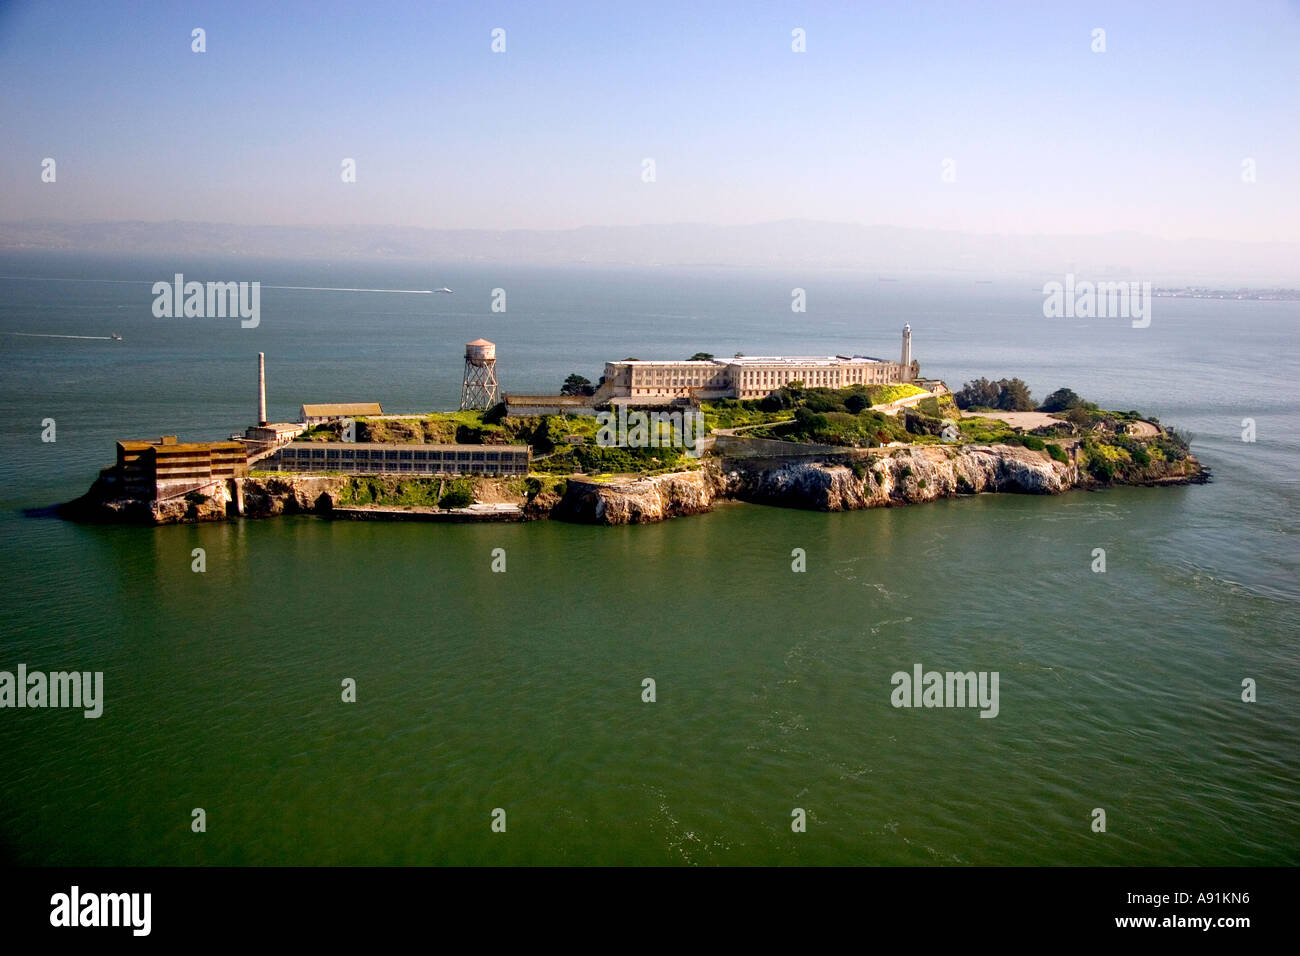 Aerial view of Alcatraz Island in the San Francisco bay, California. Stock Photo